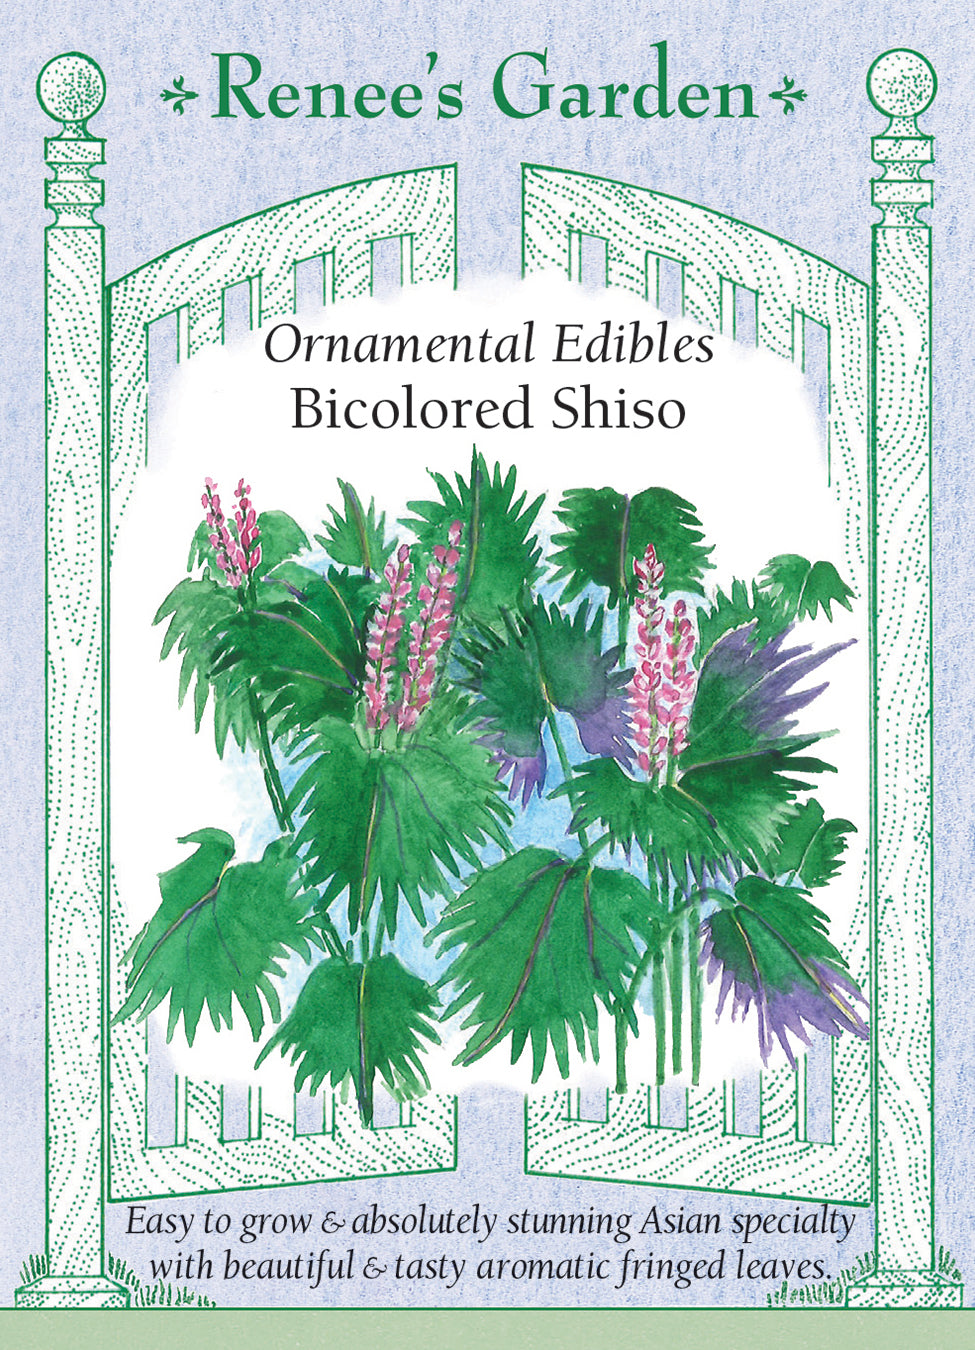 Bicolored Shiso